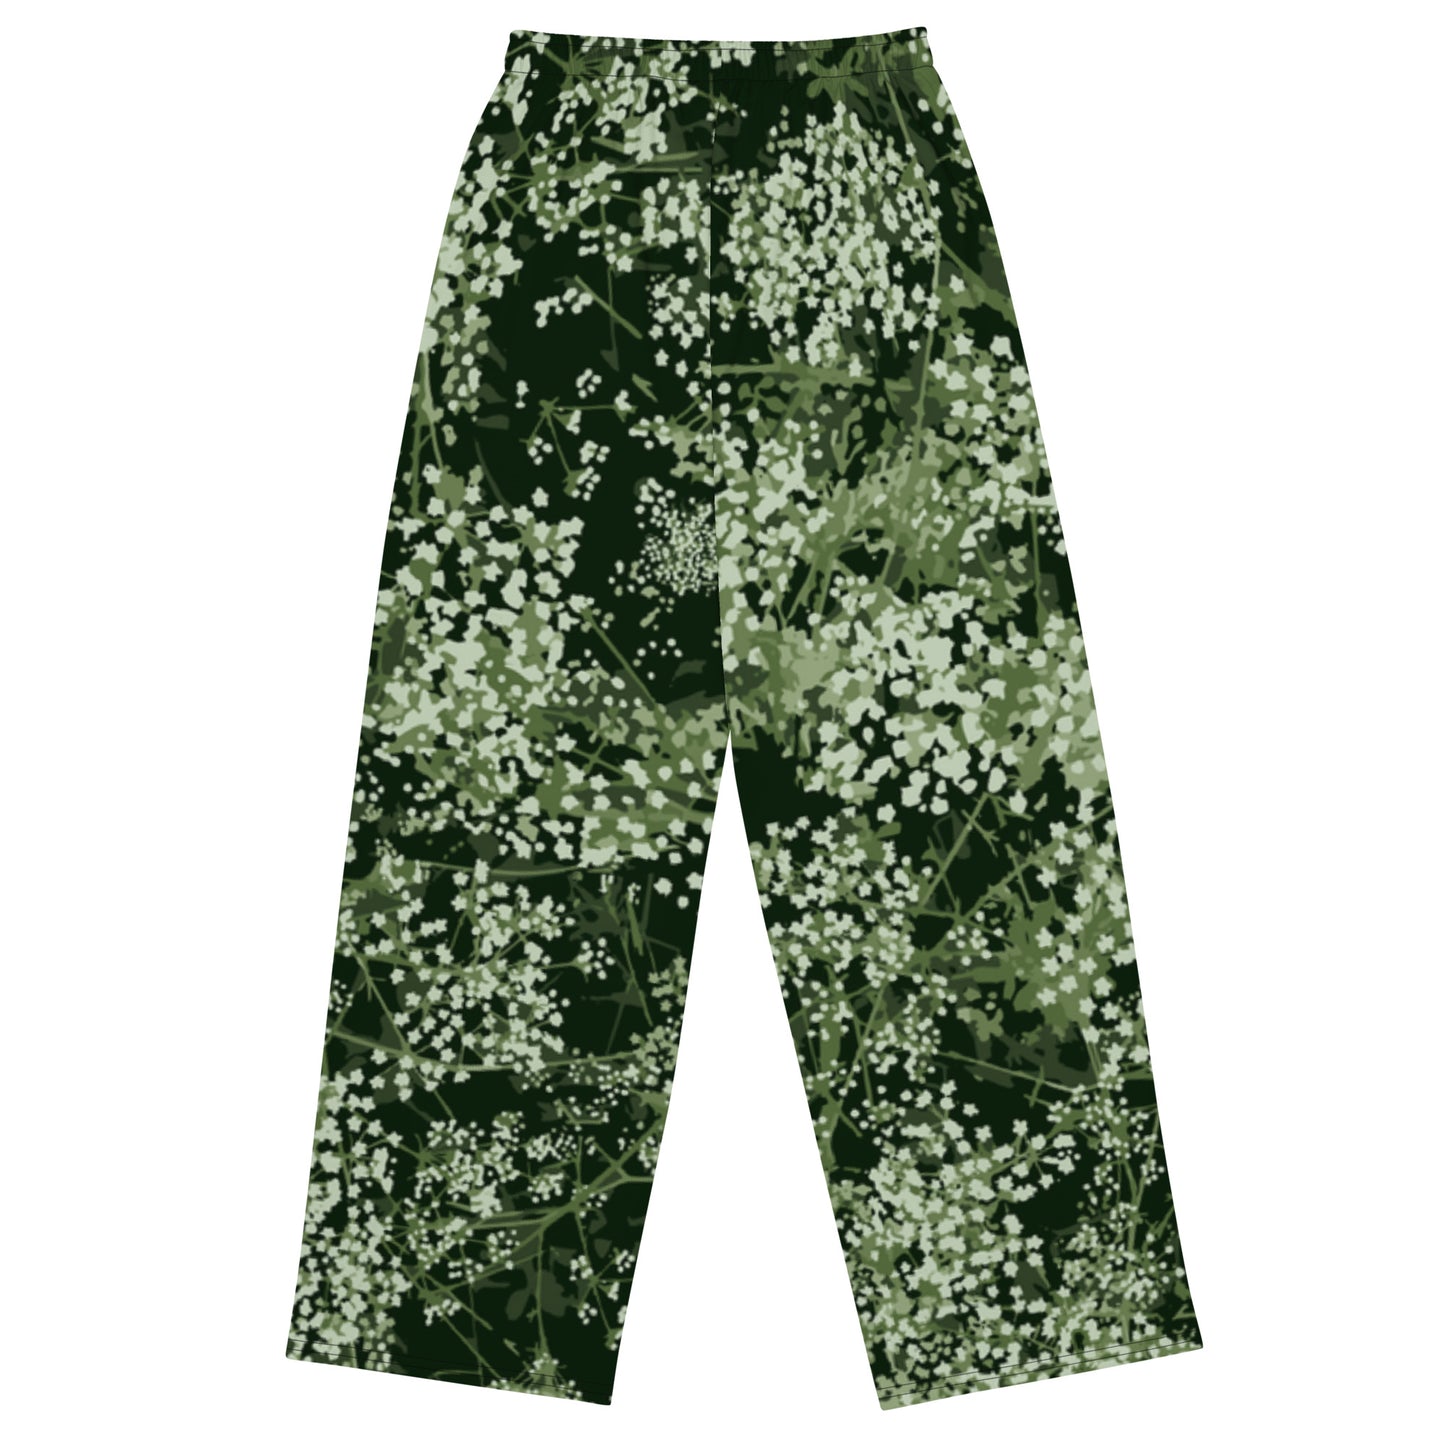 Valkovuokko - Unisex summer wide-leg pants - Pants- Print N Stuff - [designed in Turku Finland]